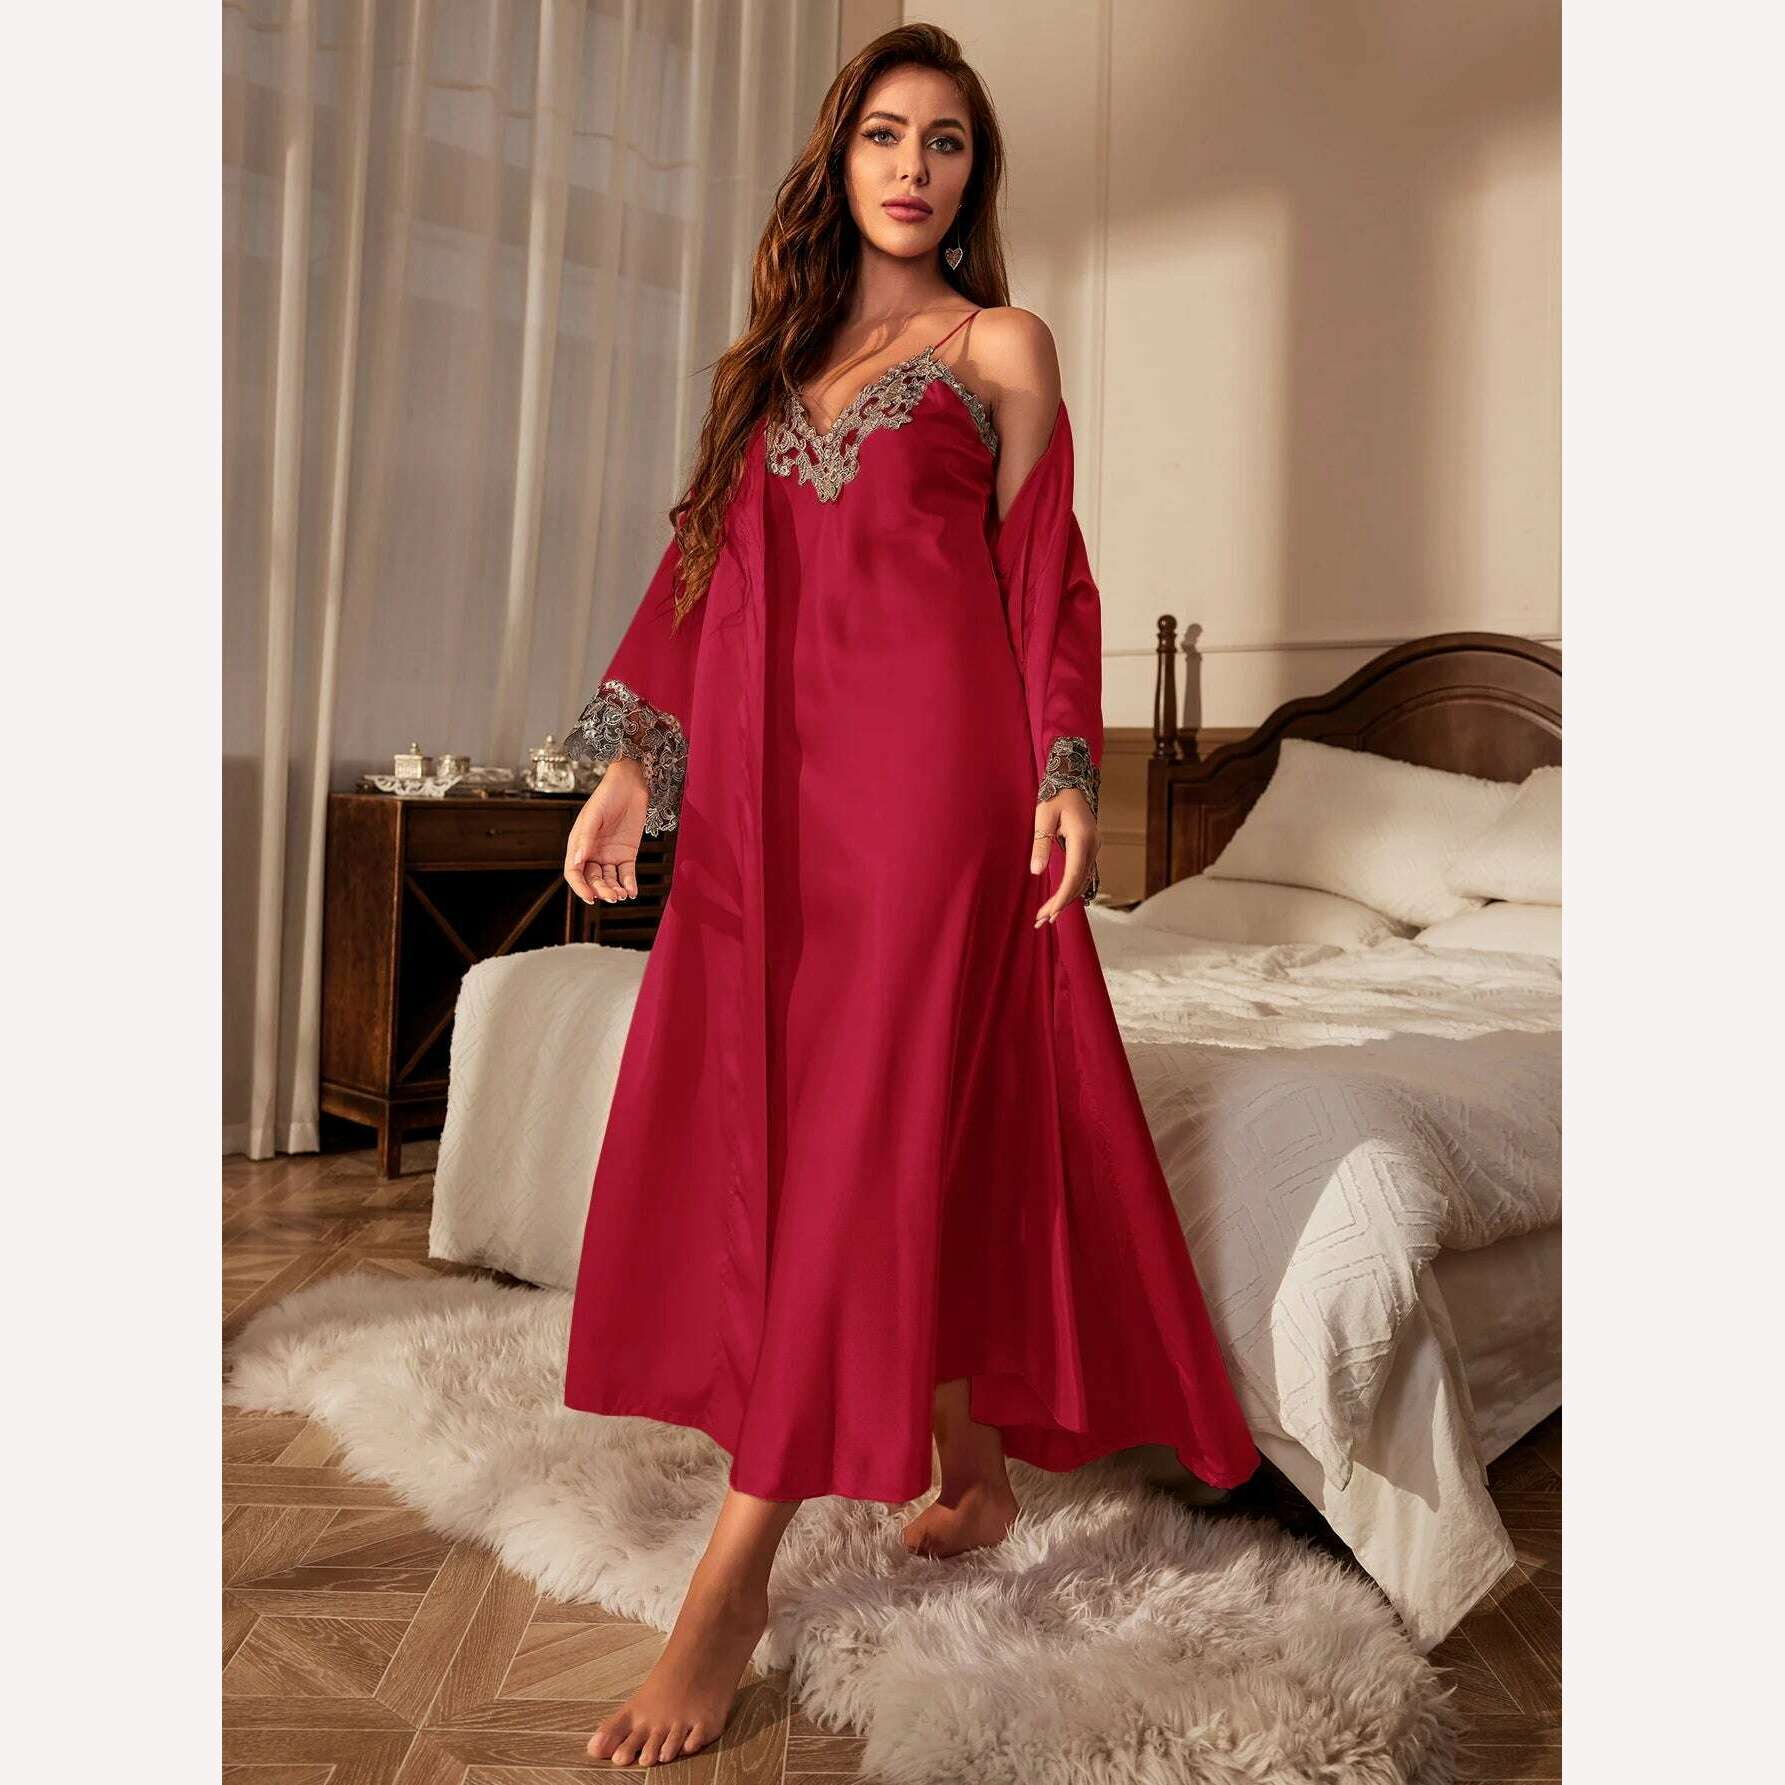 Contrast Lace Pajama Set Long Sleeve Robe With Belt  V Neck Slip Dress Women's Sleepwear  Loungewear, Red / S, KIMLUD Women's Clothes